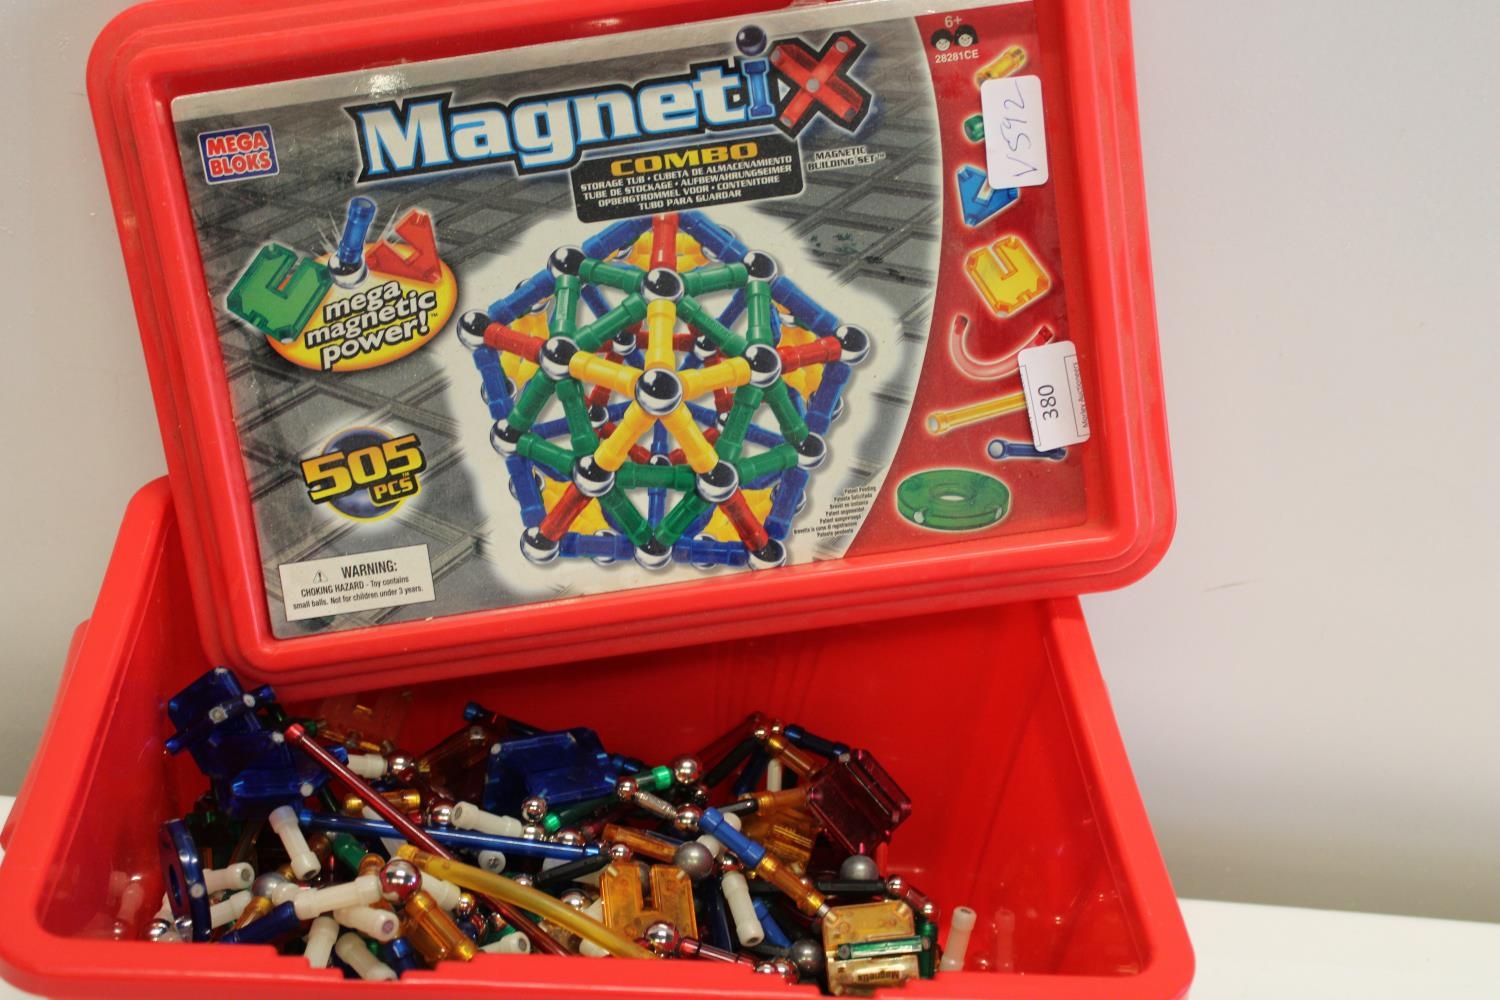 A box of Magnet mega blocks